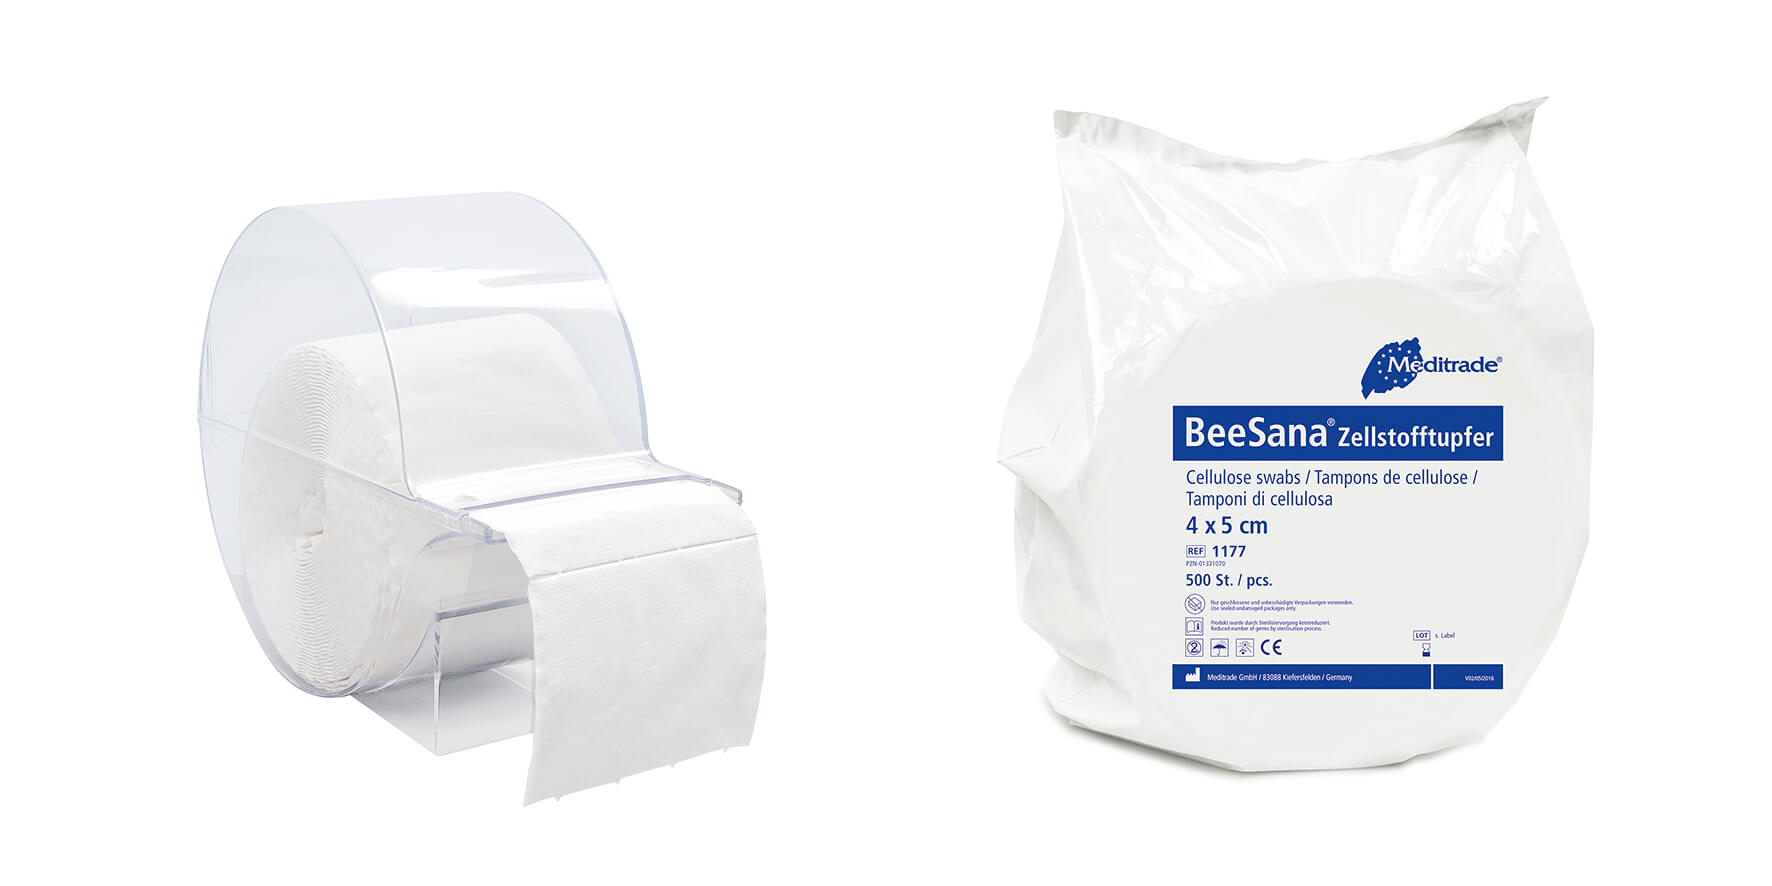 BeeSana® Zellstofftupfer - sterilisiert